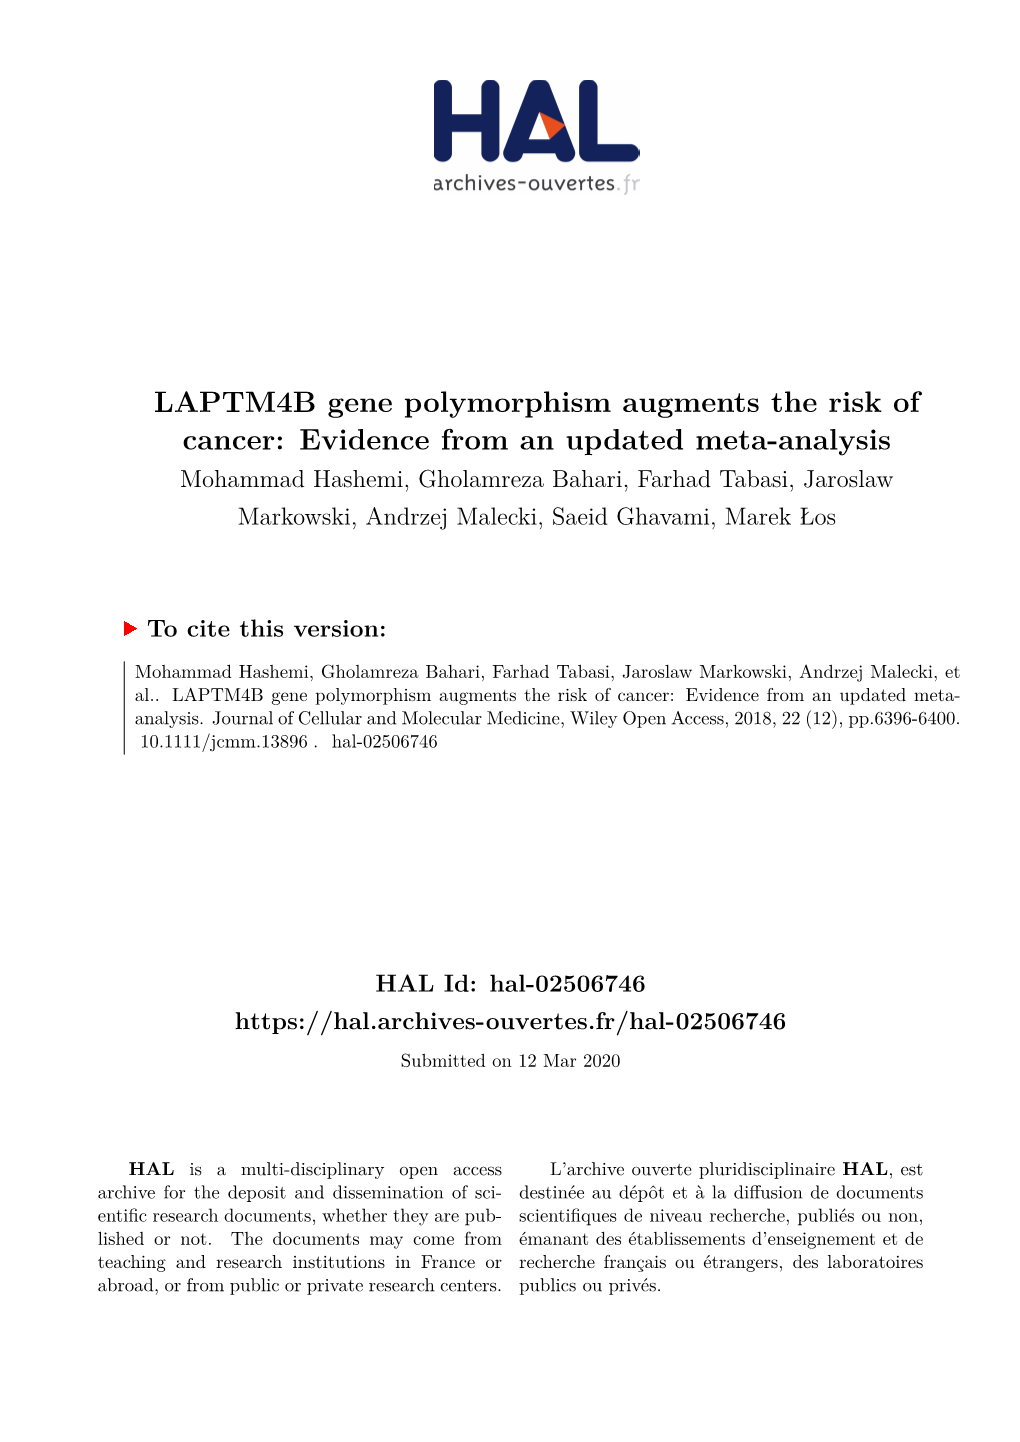 LAPTM4B Gene Polymorphism Augments